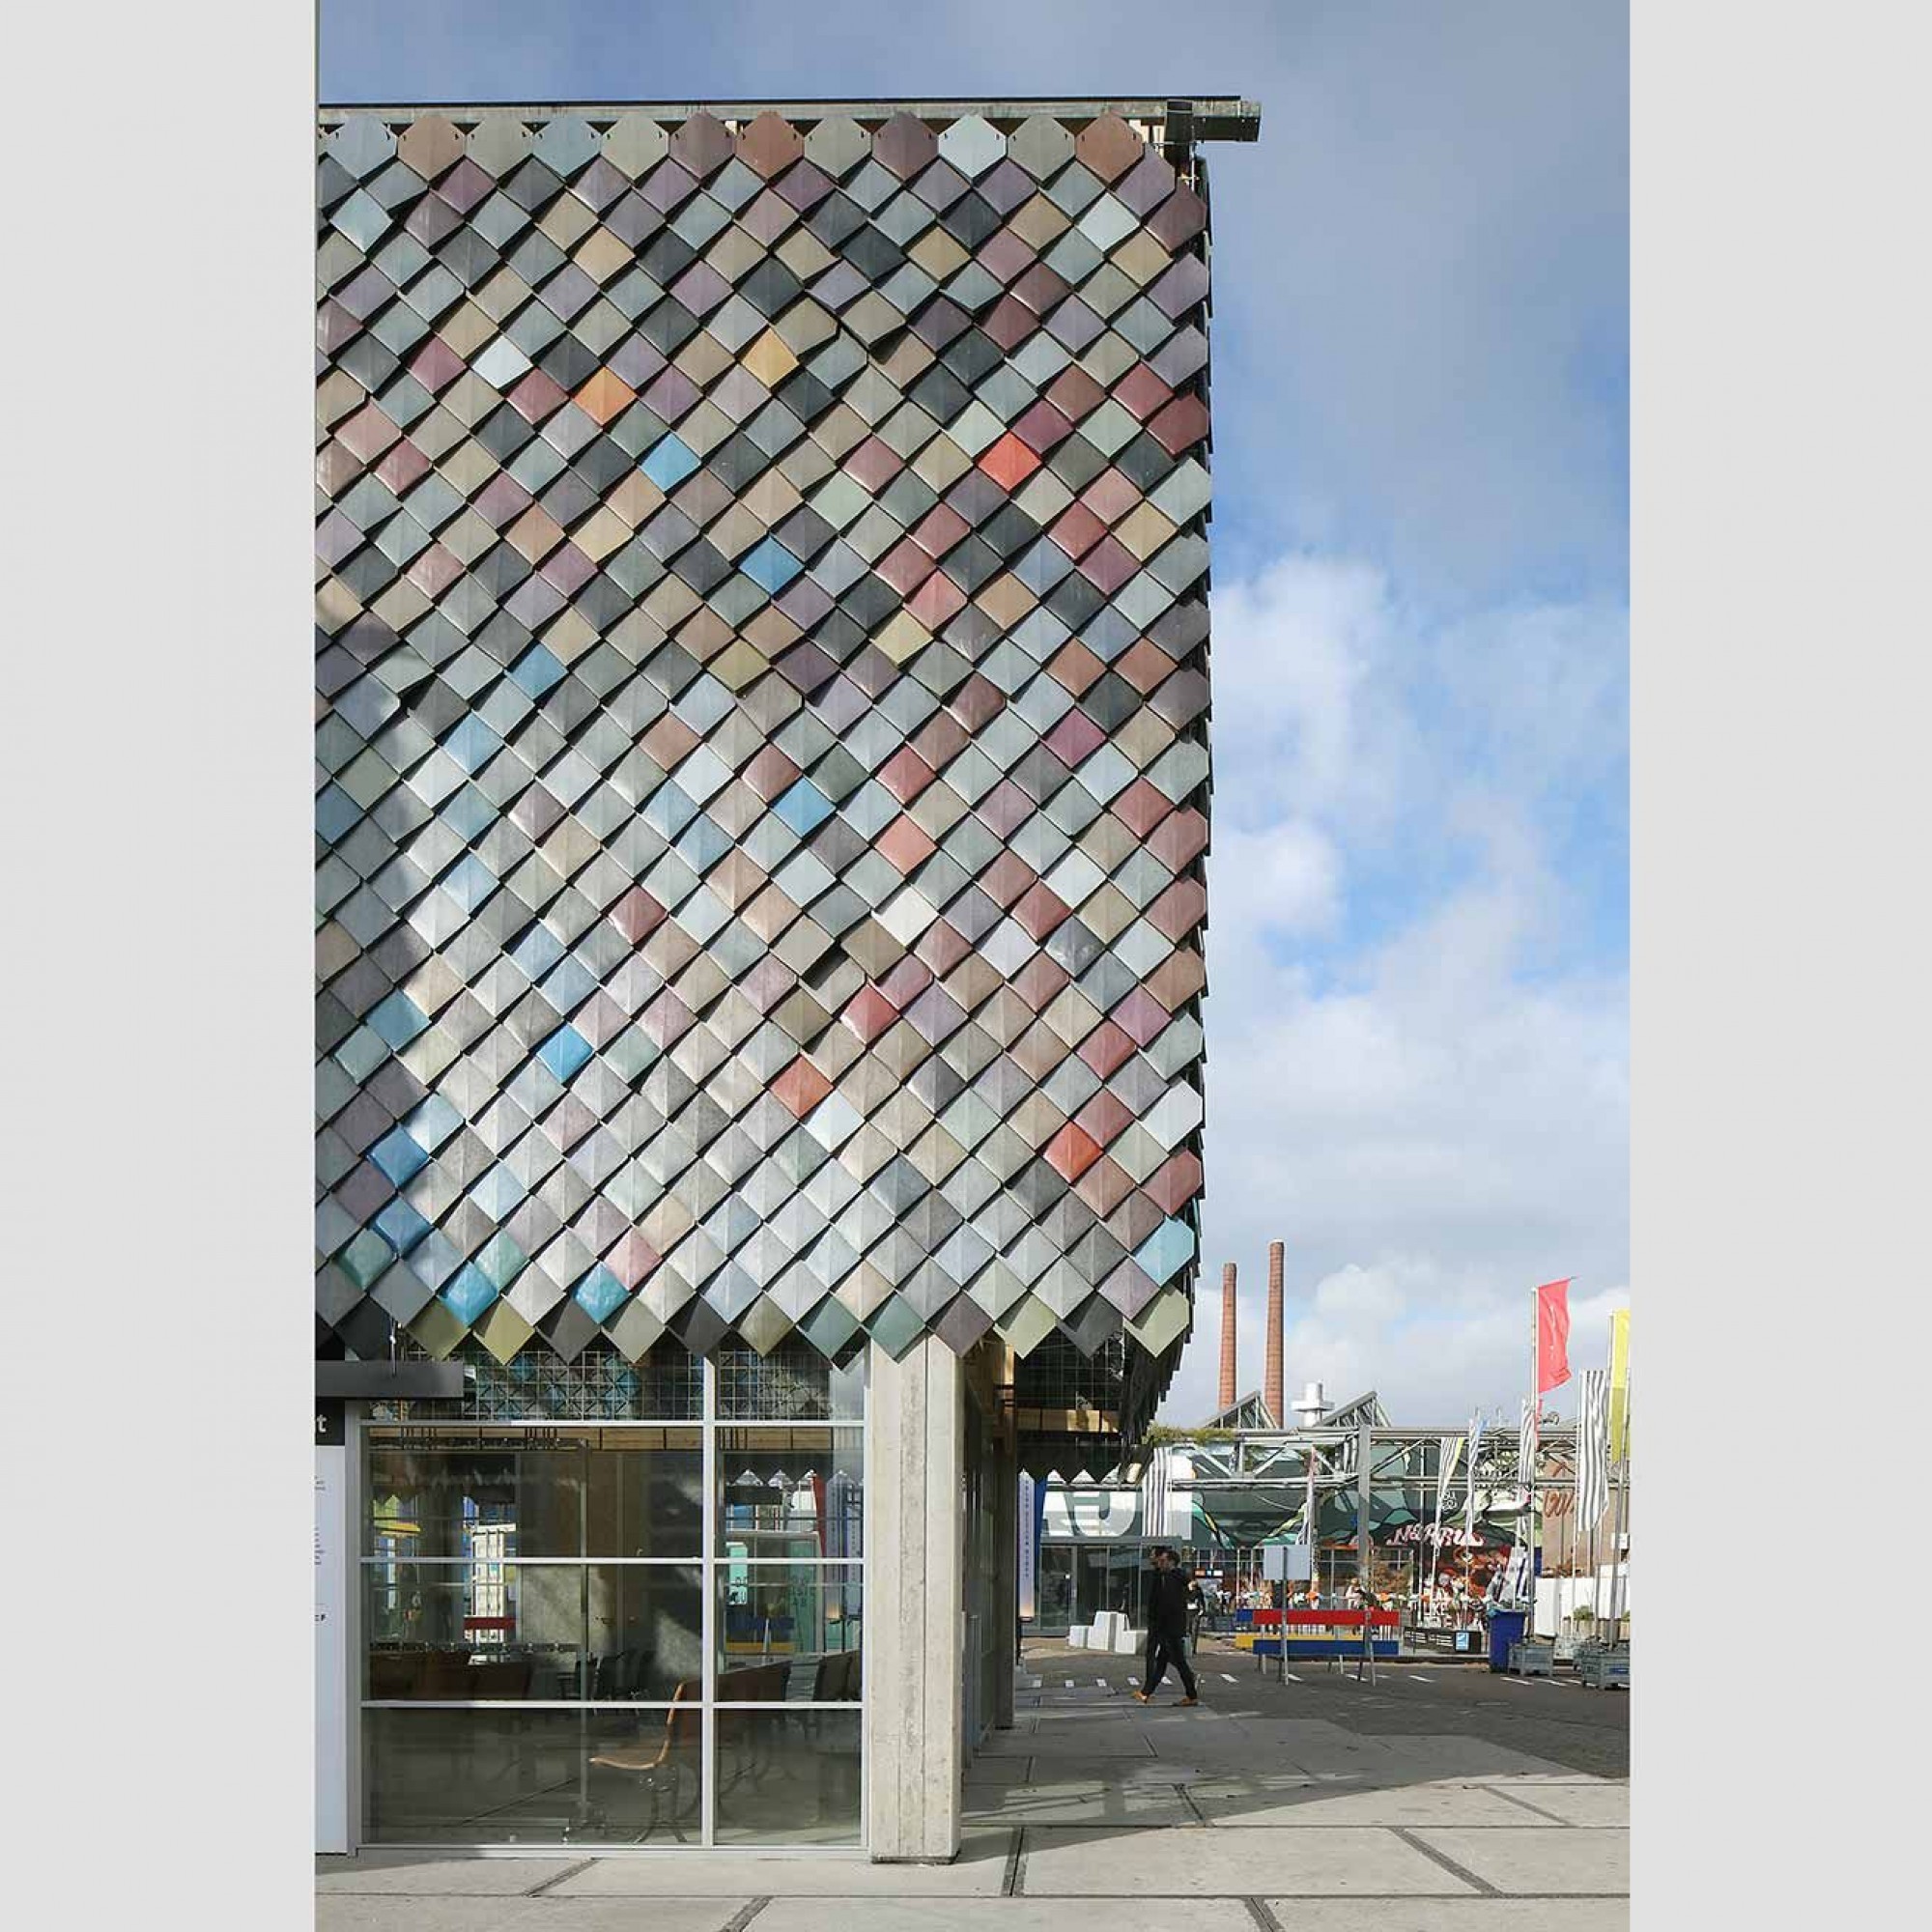 „People’s Pavilion“ an der „Dutch Design Week 2017“.